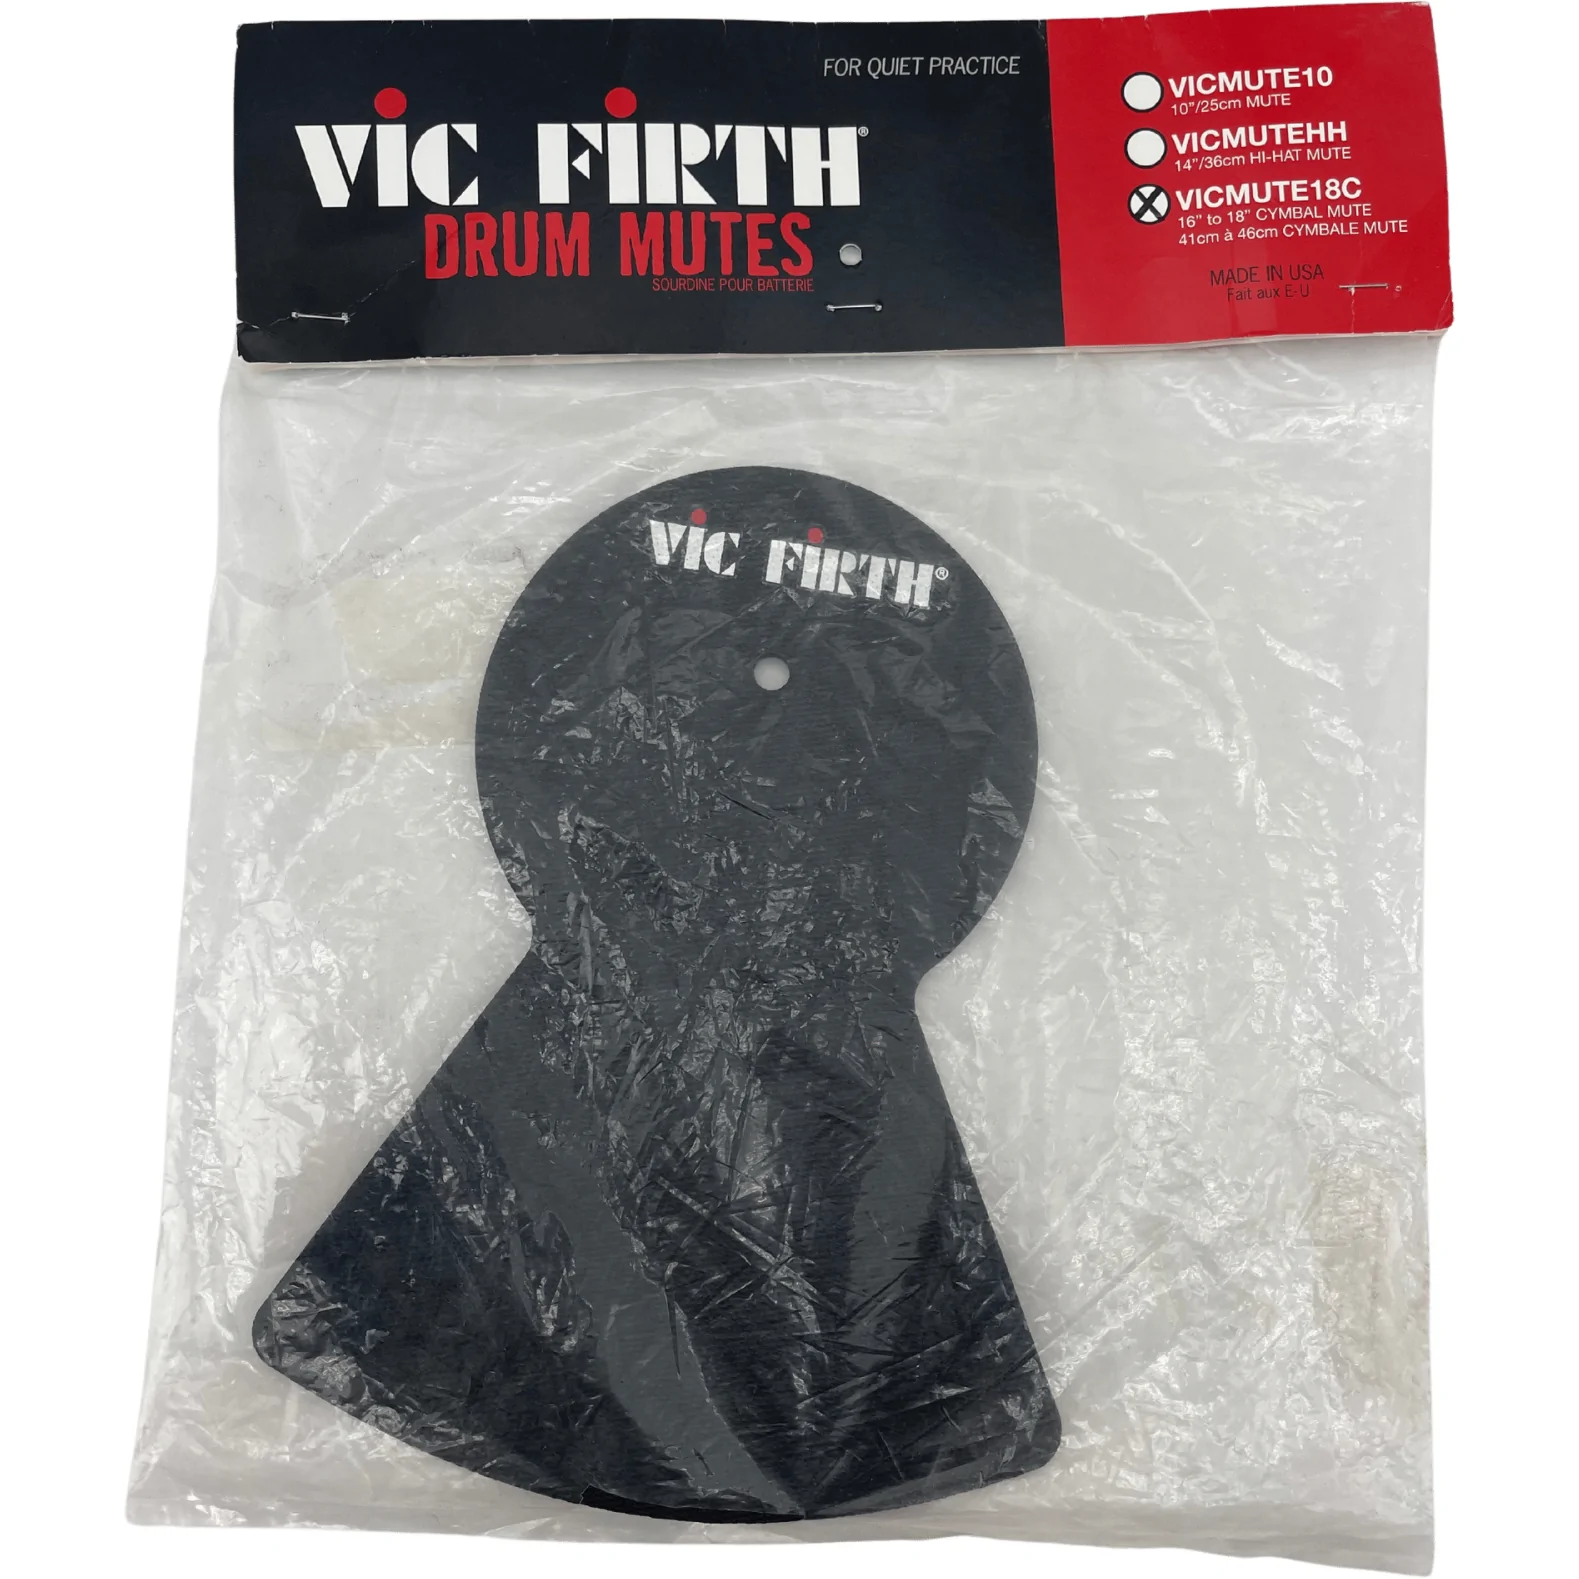 Vic Firth Drum Mutes / VICMUTE18C / Black **DEALS**